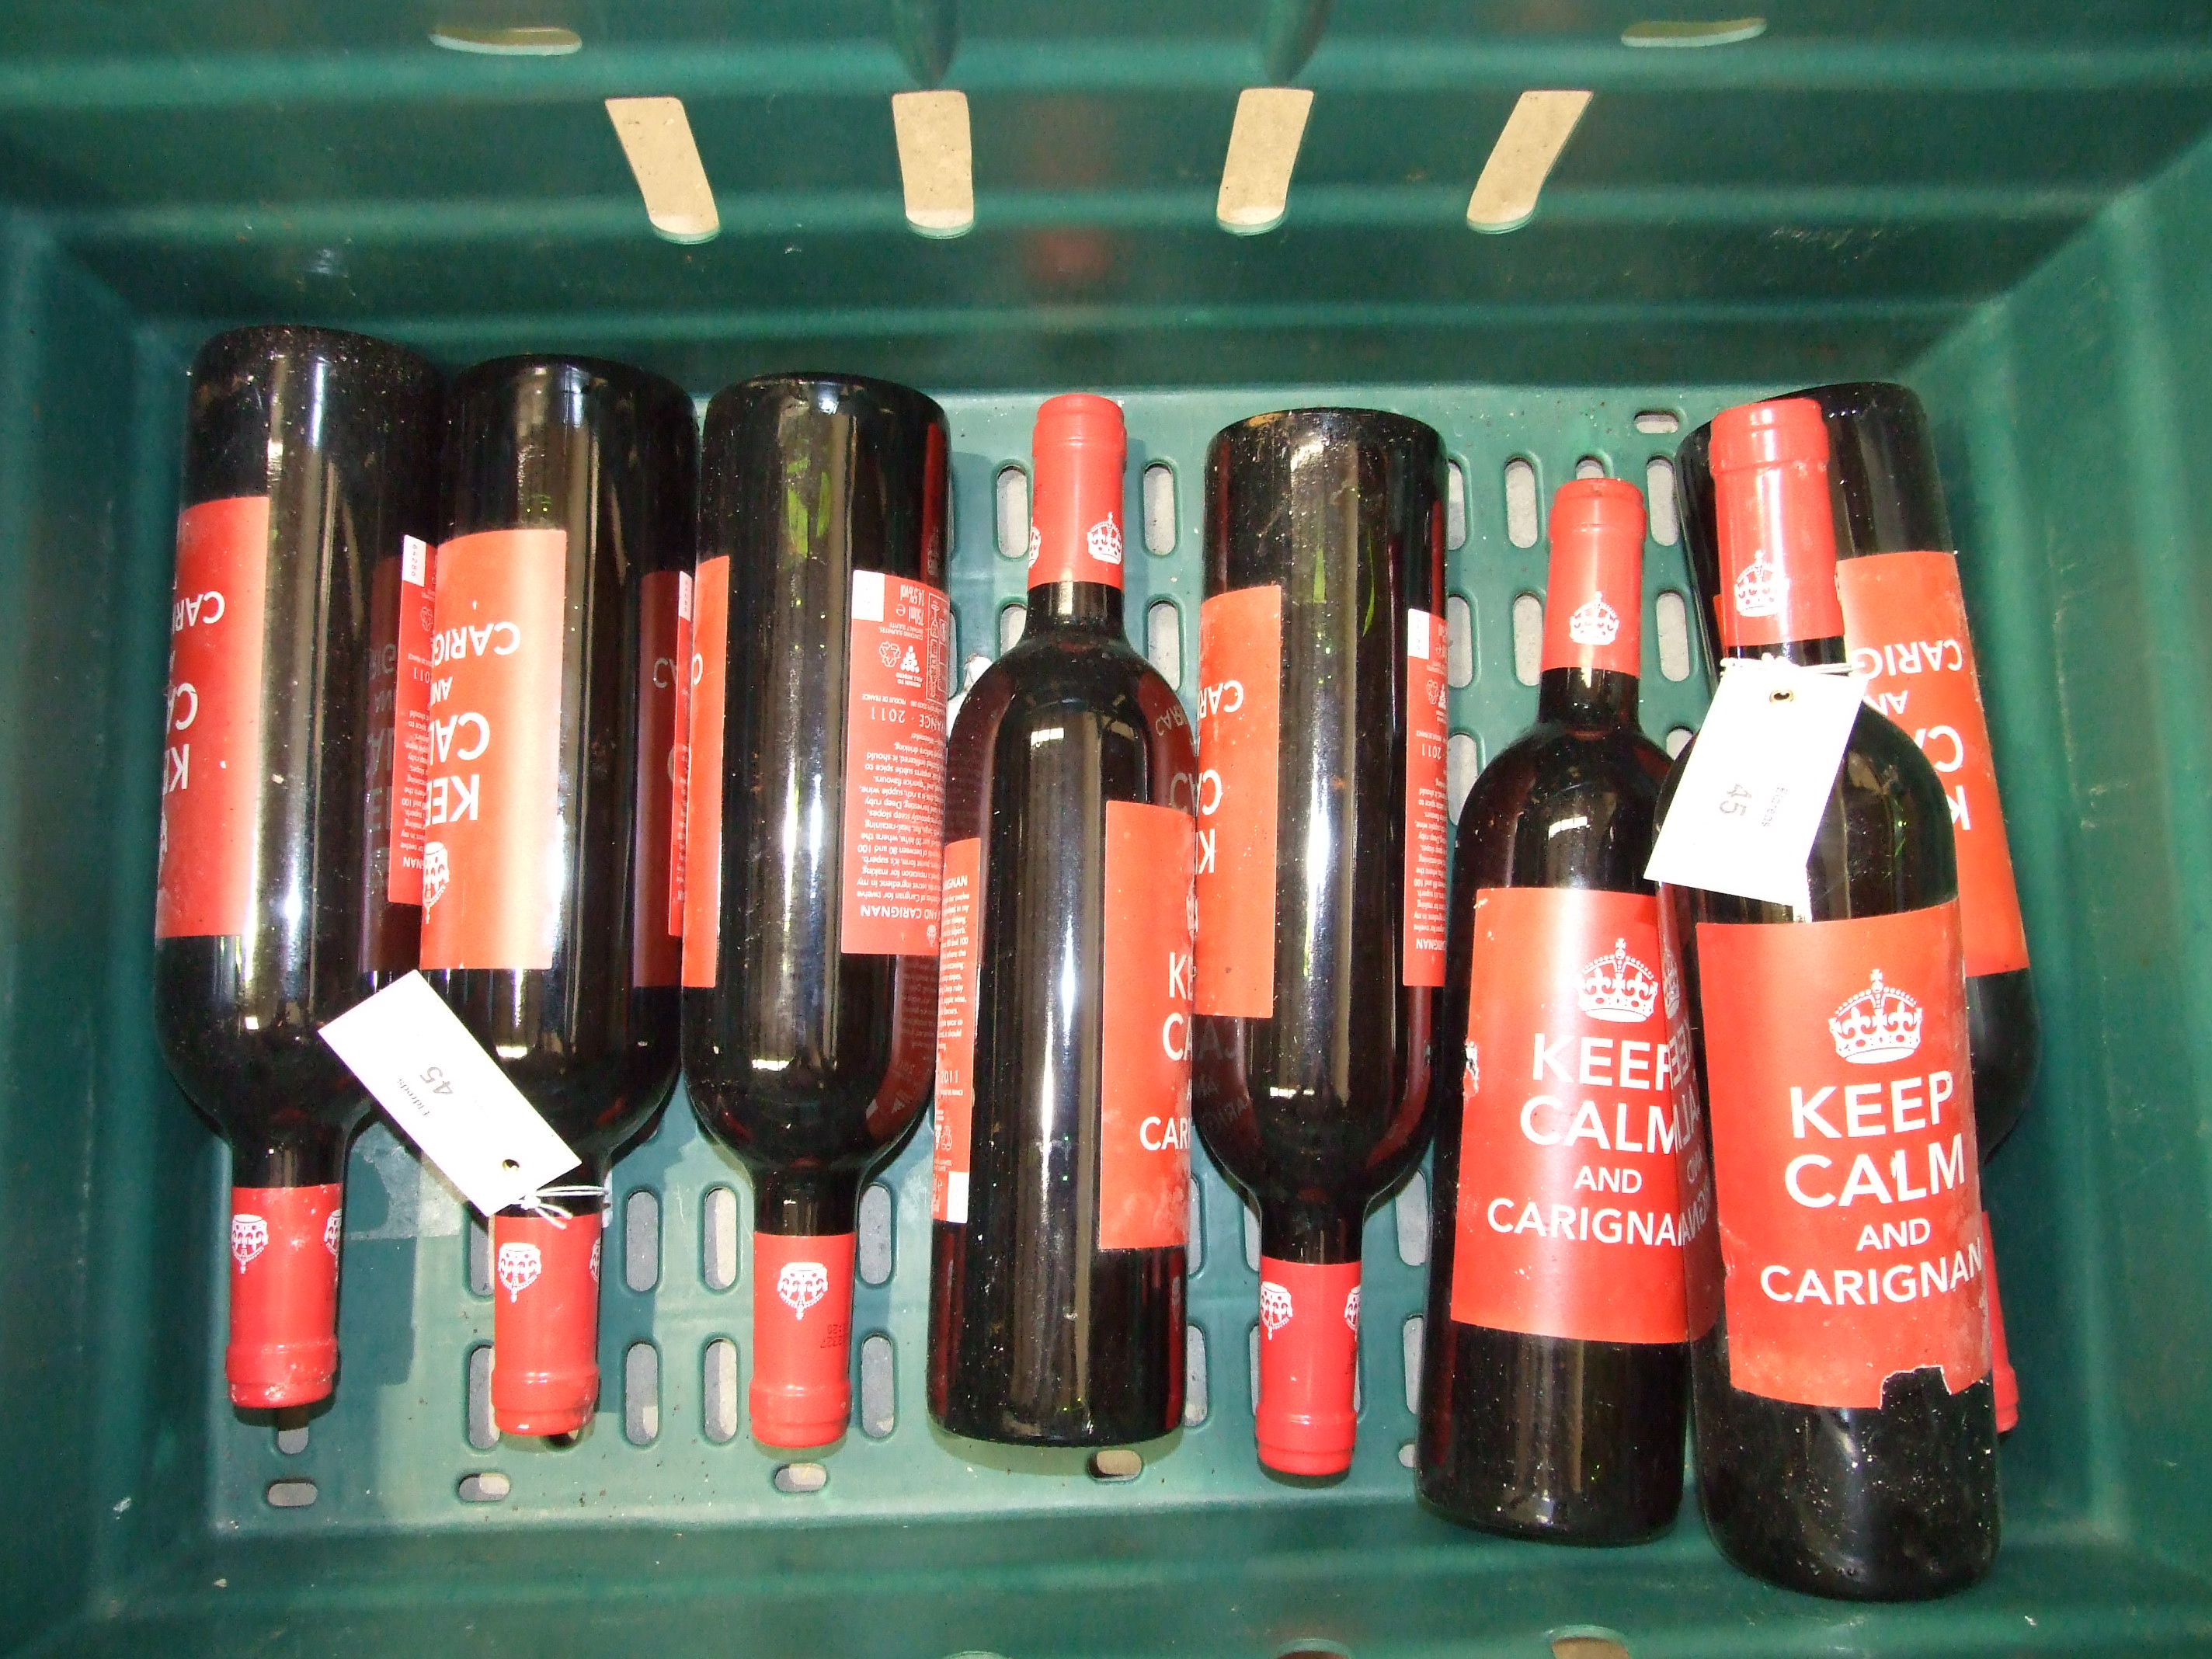 Keep Calm and Carignan, v de t, 8 bottles.